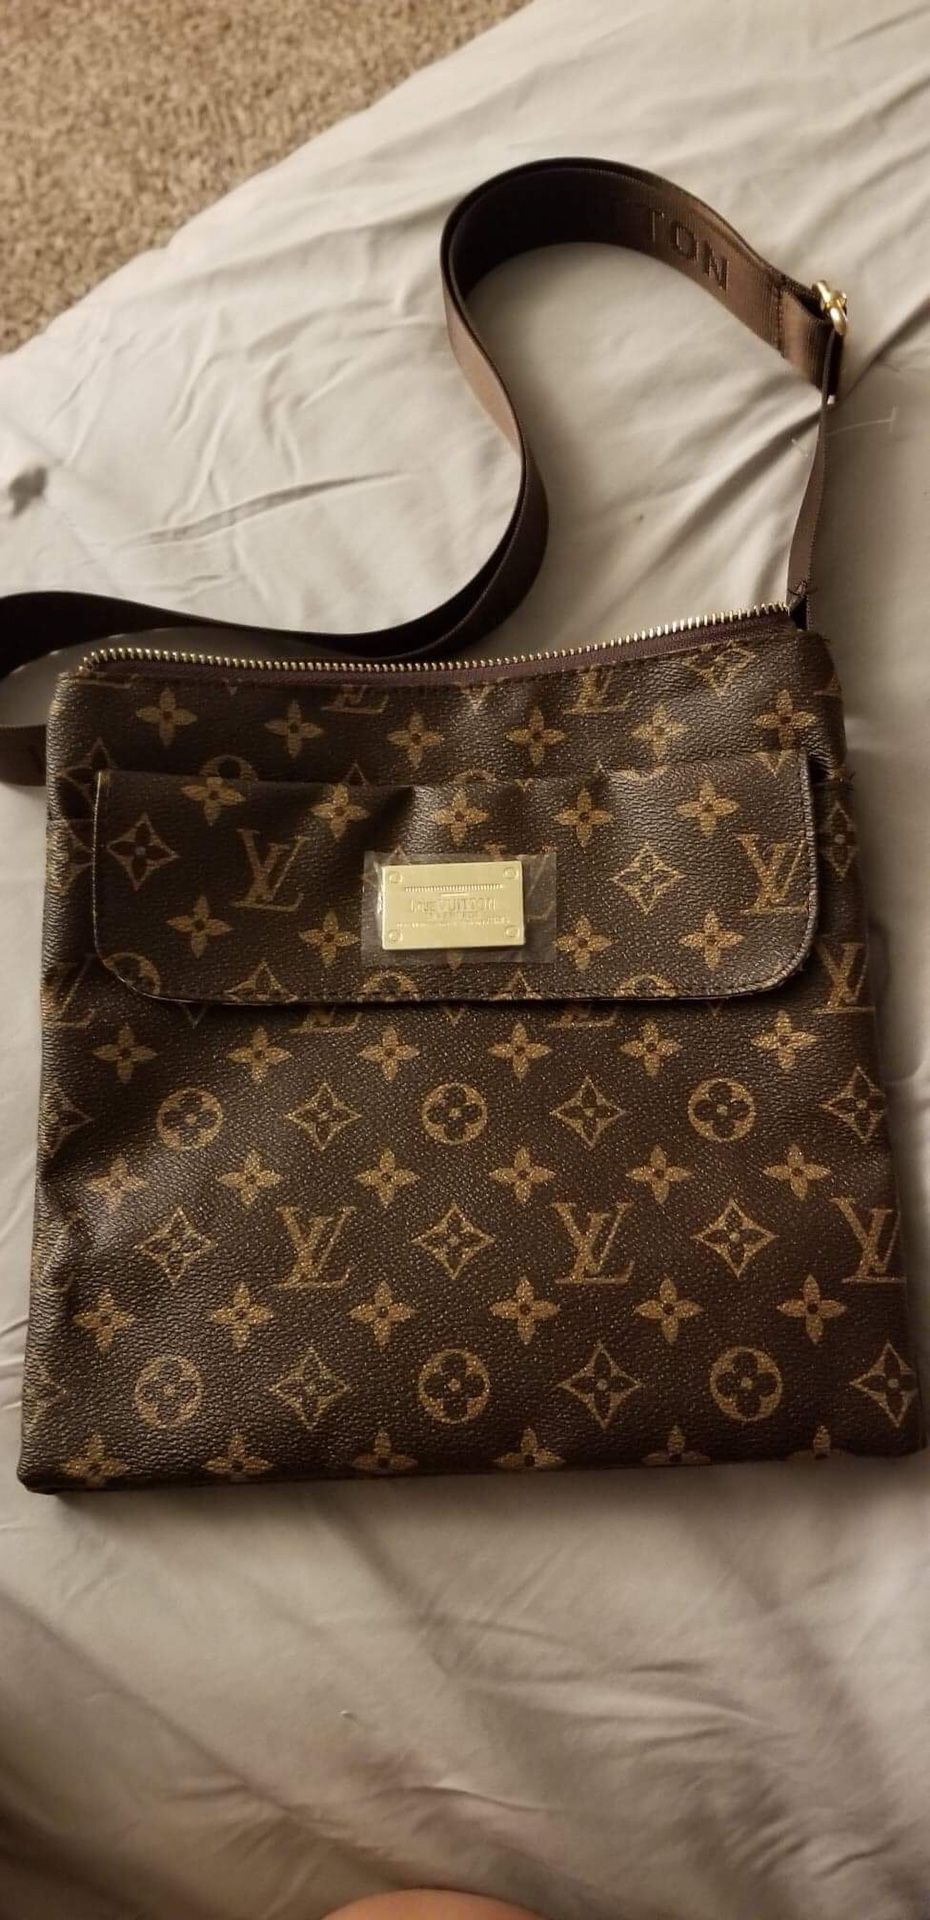 Louis Vuitton Clapton backpack $350 for Sale in Auburn, WA - OfferUp